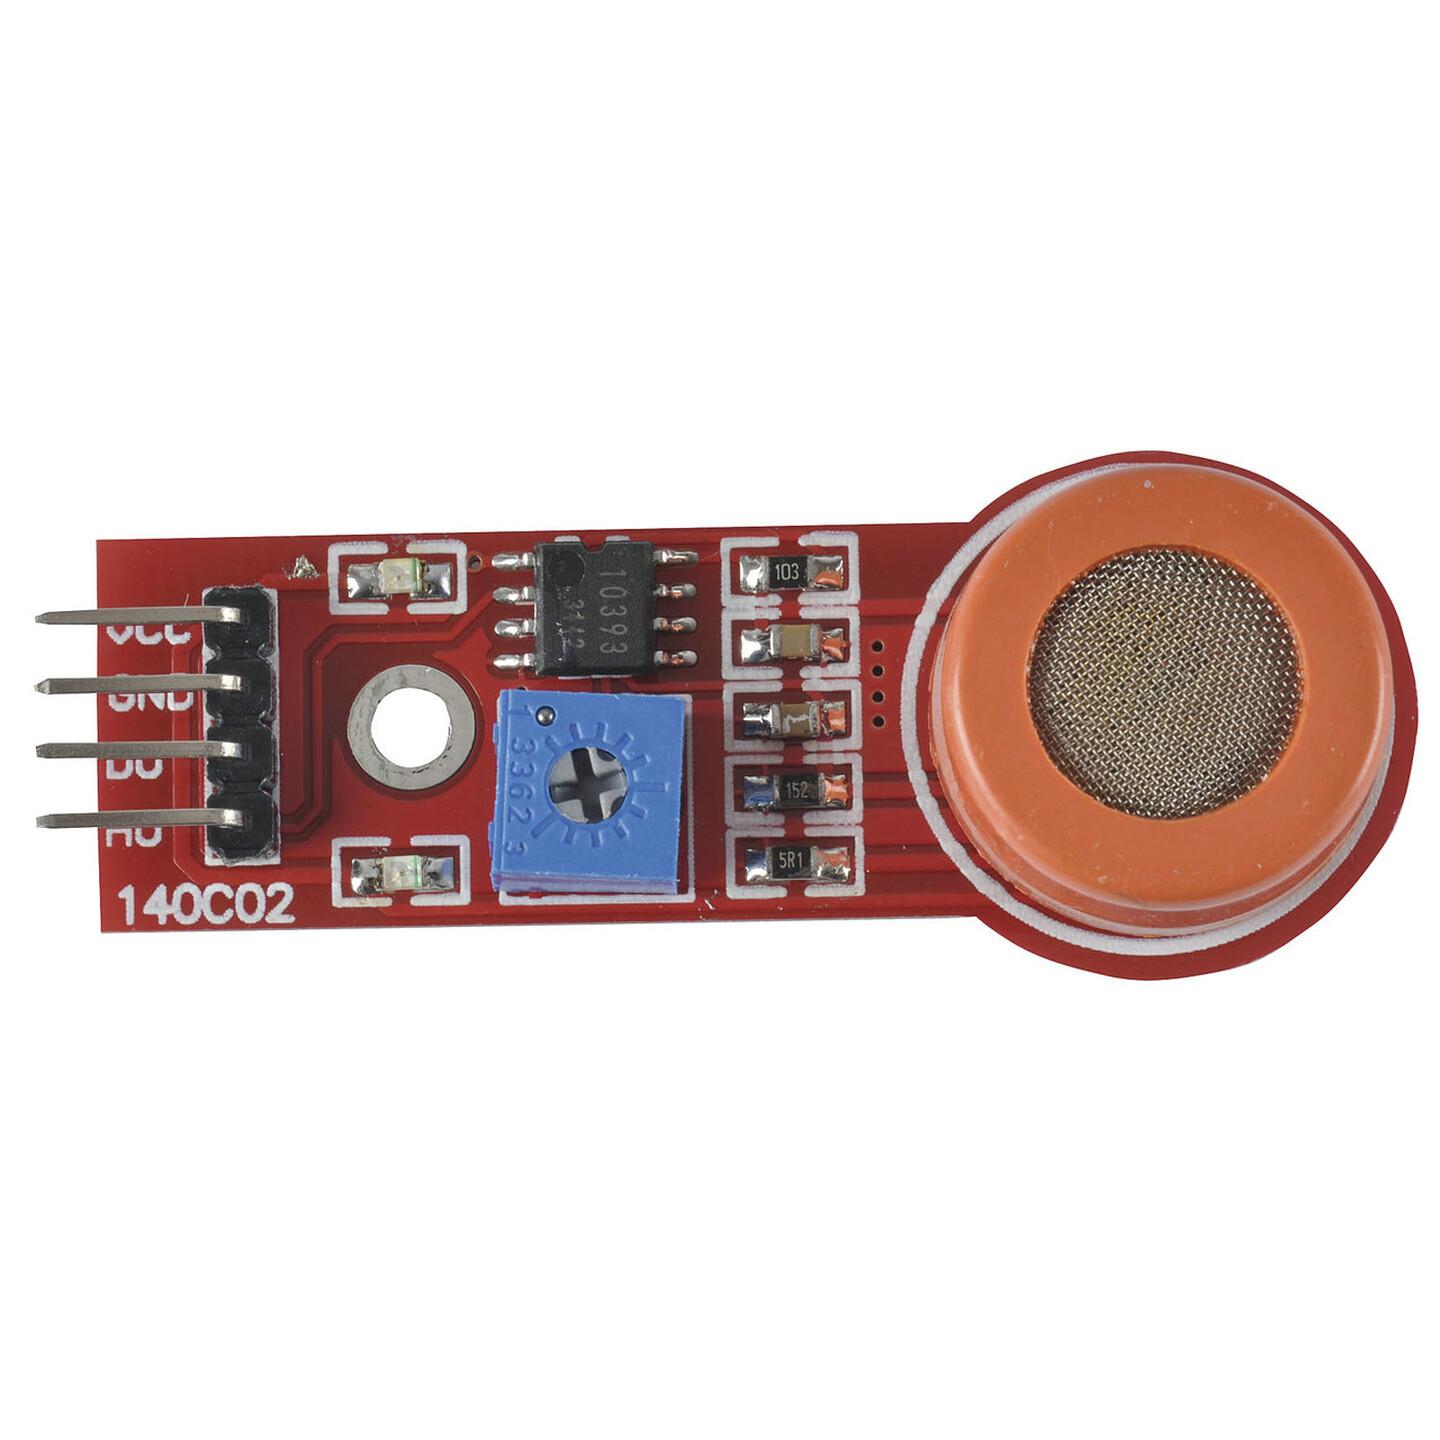 Arduino Compatible Alcohol Sensor Module